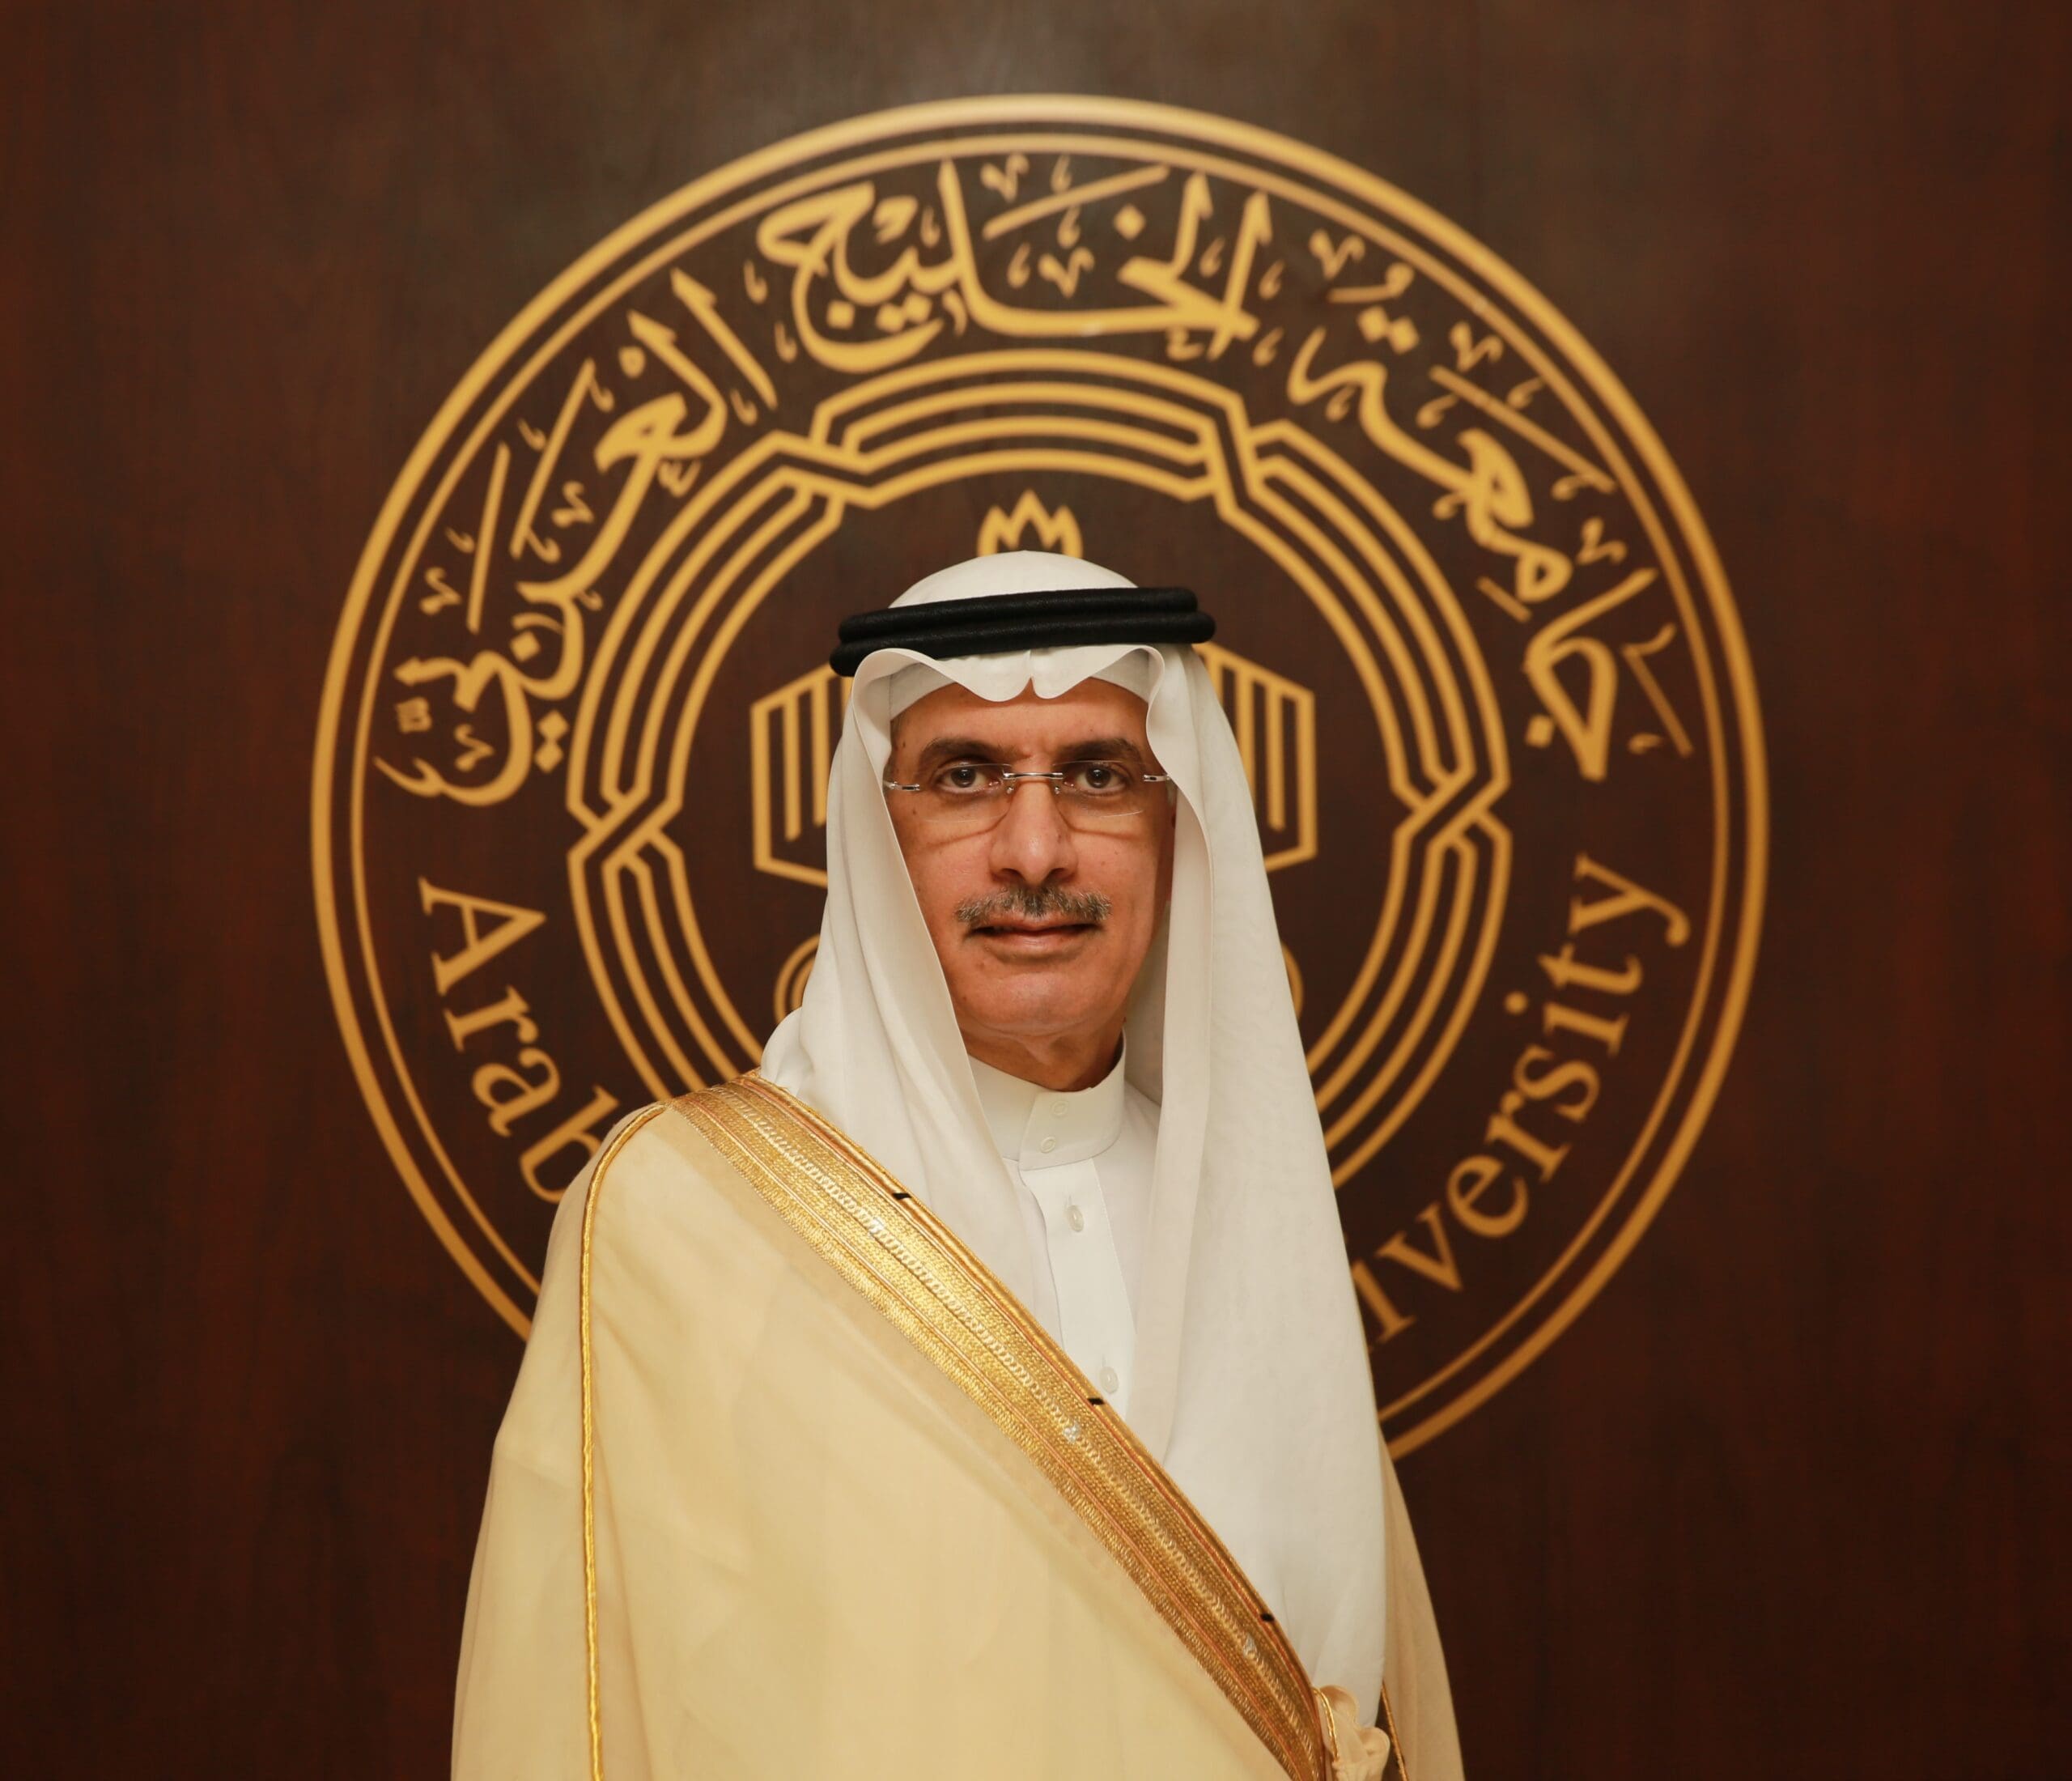 Dr Khalid Abdul Rahman Al-ohaly